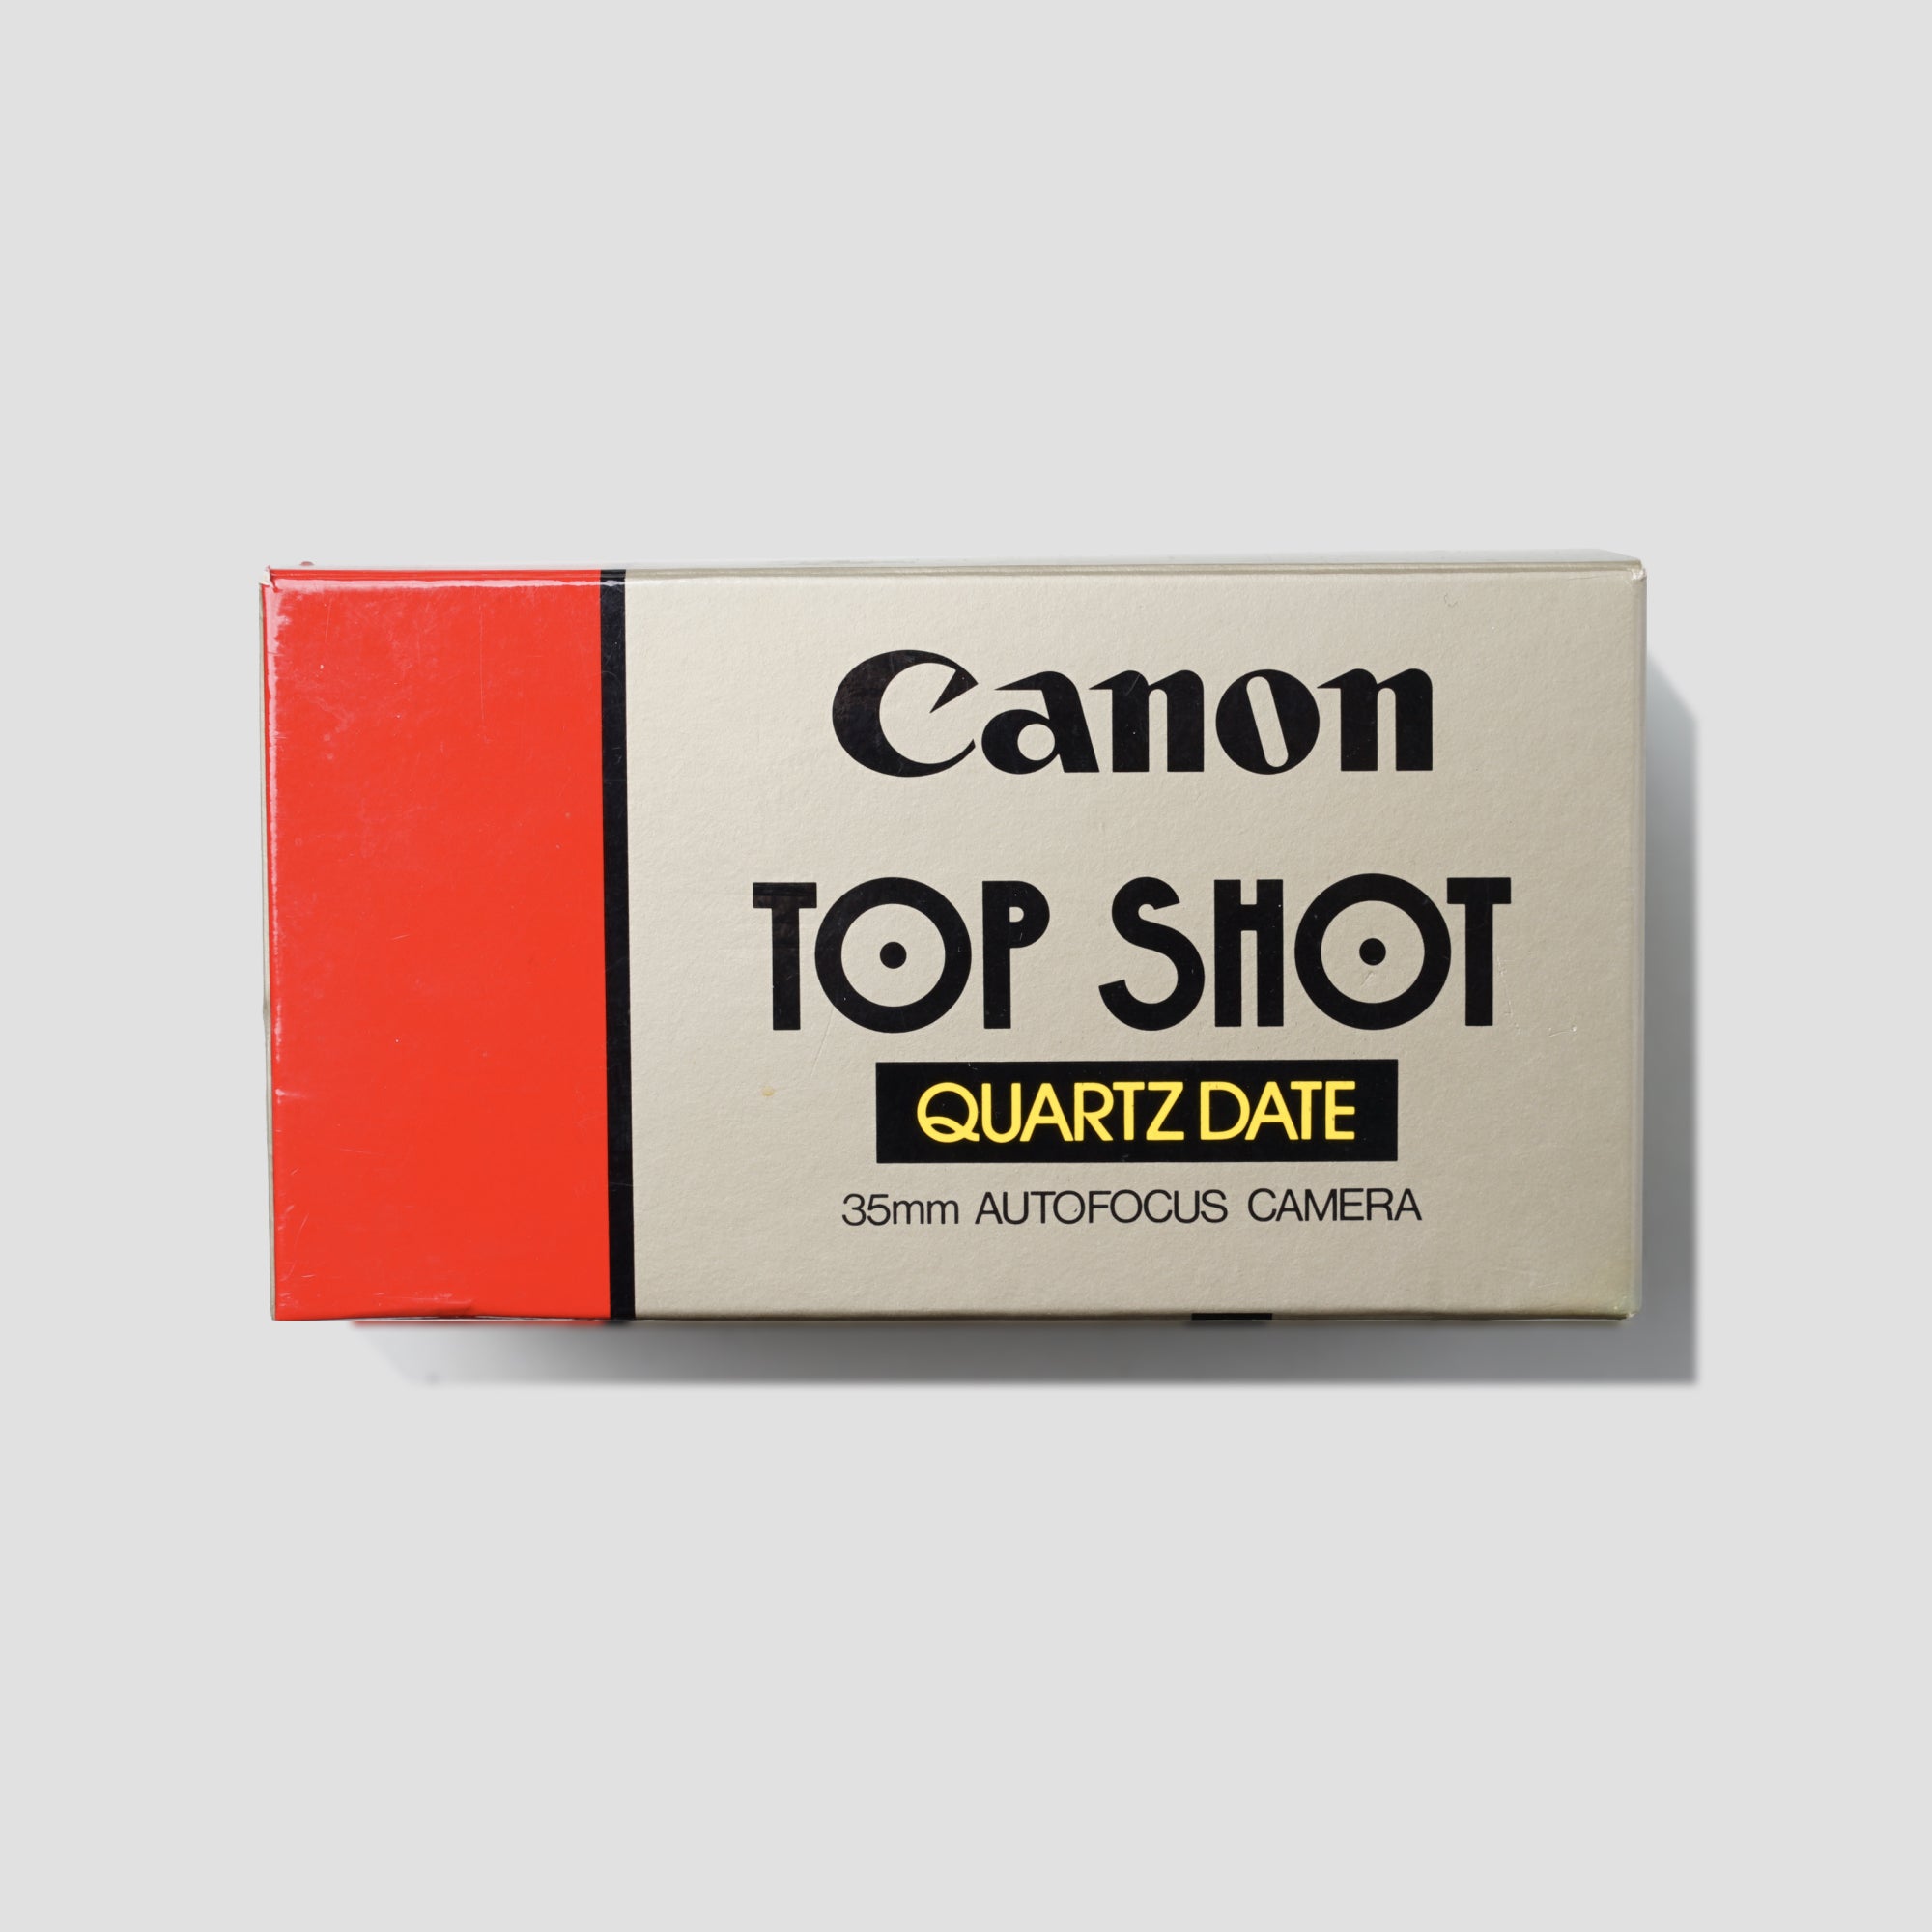 Buy Canon Top Shot (Sure Shot) now at Analogue Amsterdam